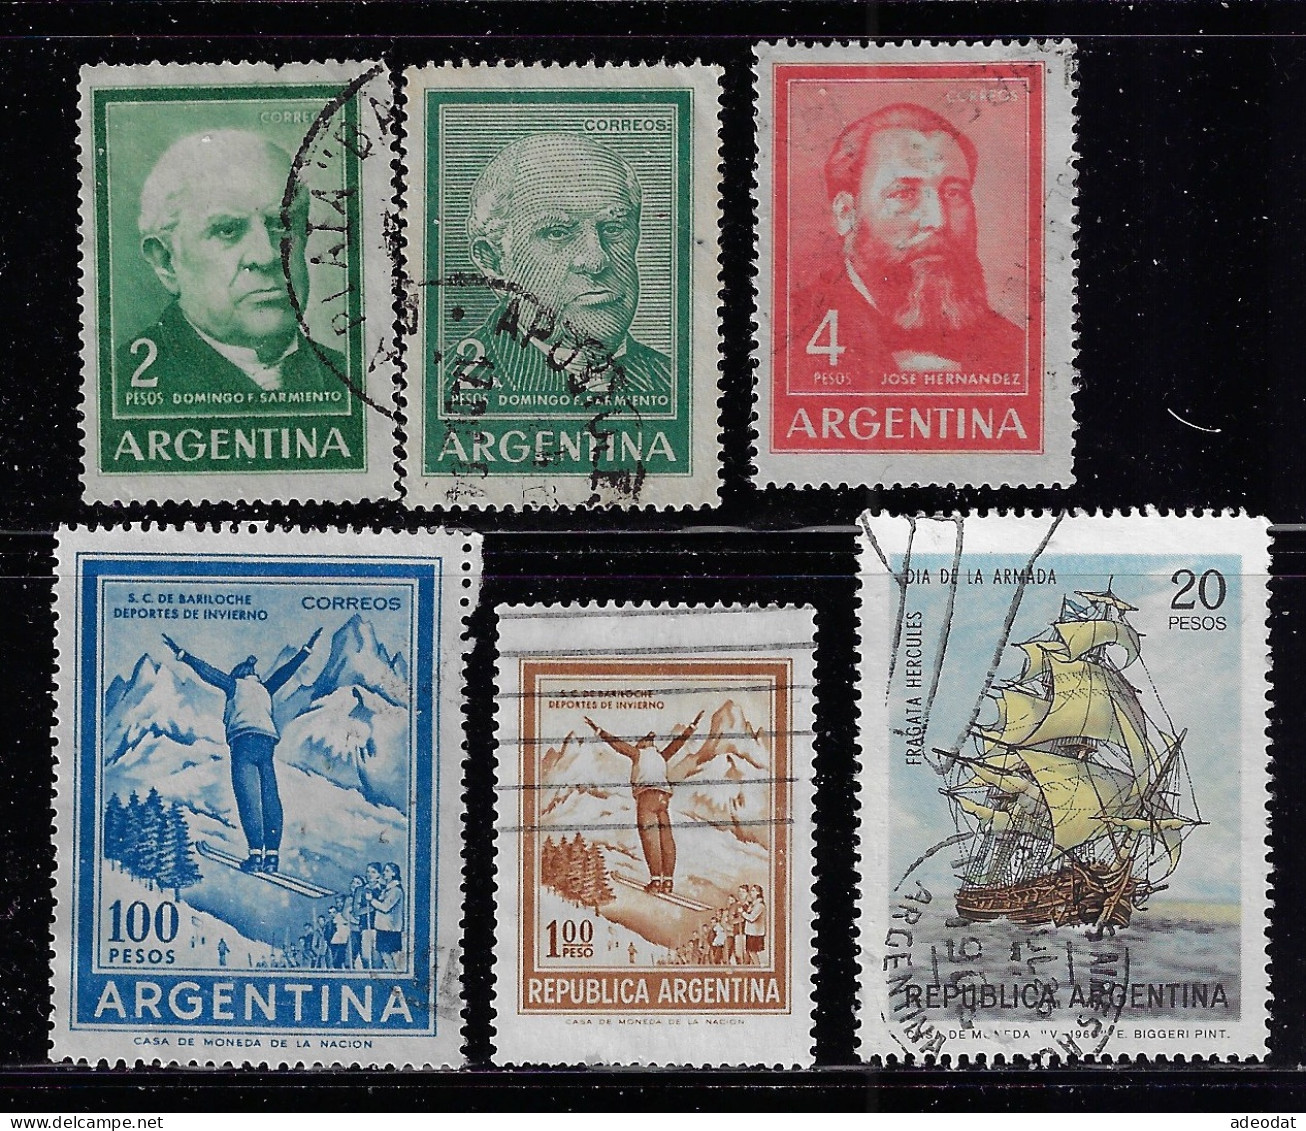 ARGENTINA  1959,1962  SCOTT #704,742,742A,894,938  USED - Unused Stamps